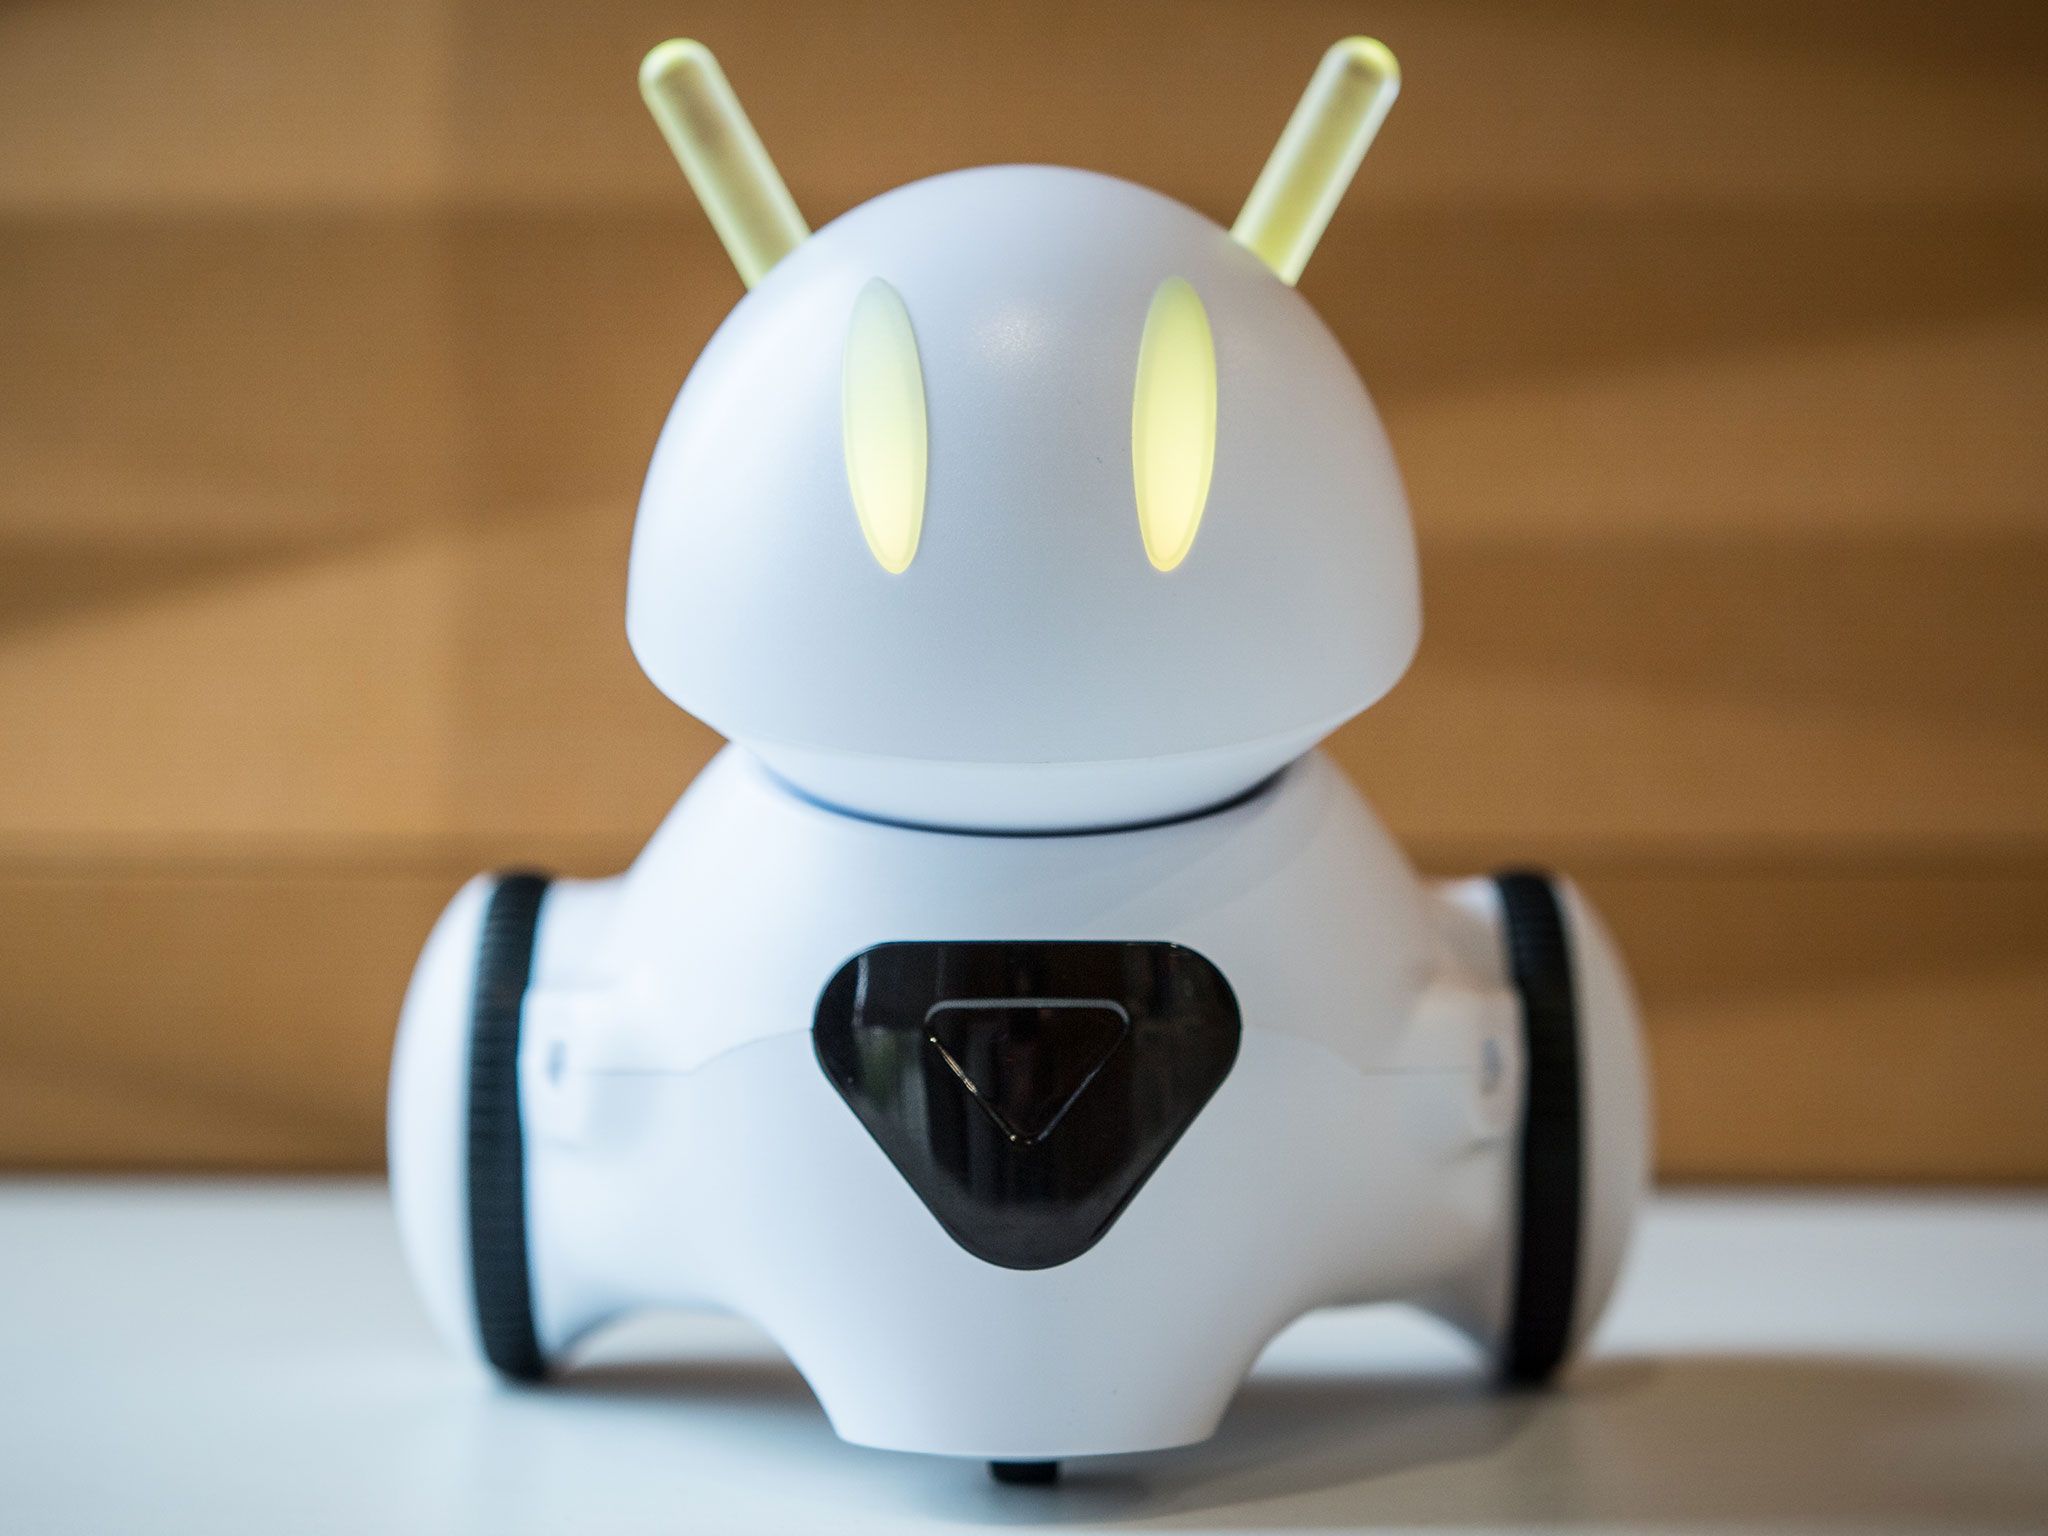 These Robots Will Teach Kids Programming Skills - IEEE Spectrum